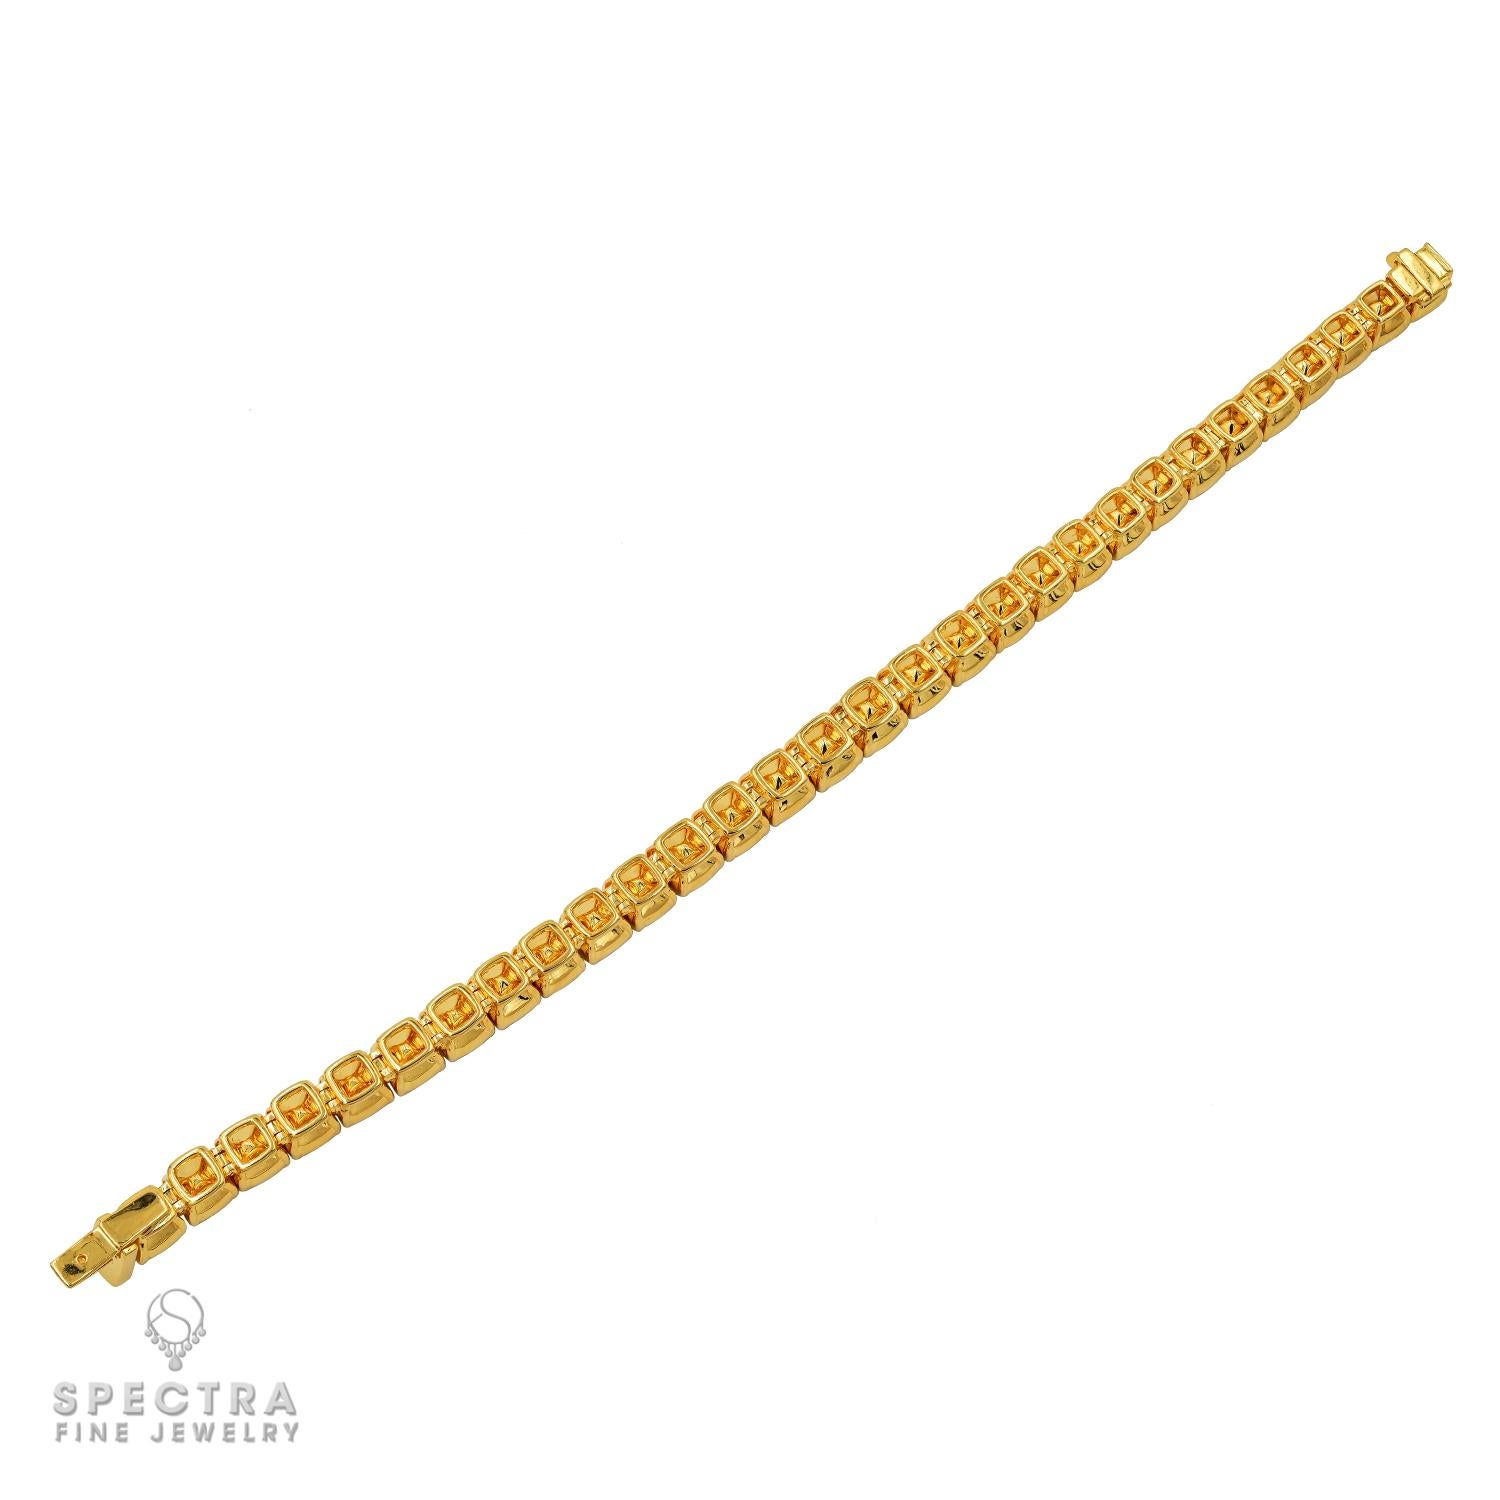 Contemporary Spectra Fine Jewelry 32.83 Carat Yellow Diamond Bracelet For Sale